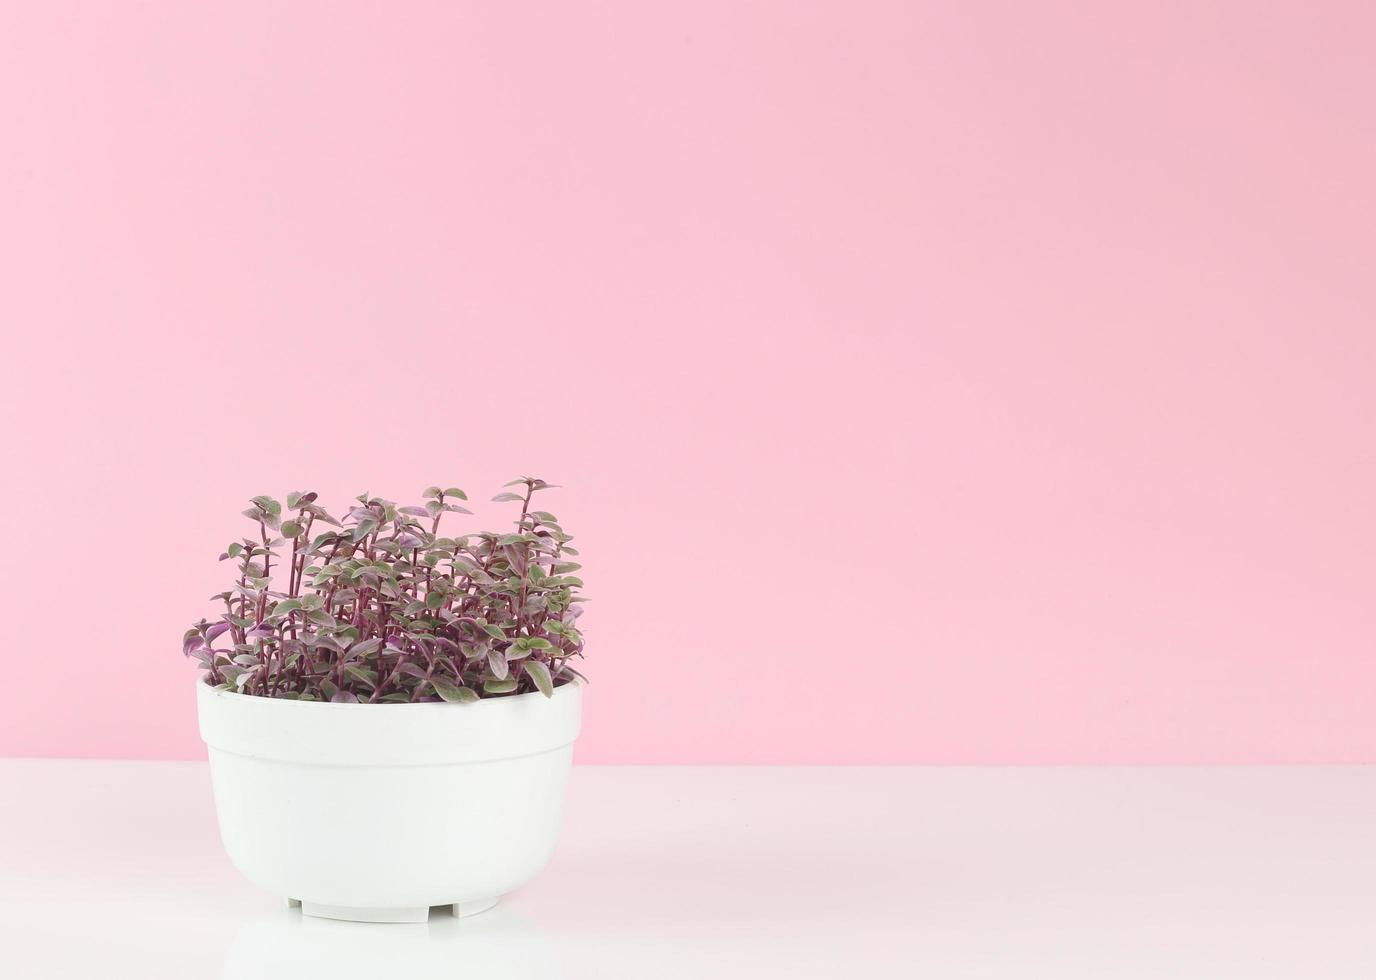 mooie pot plant op wit tegen roze achtergrond - moederdag - plantengroei - red de aarde foto